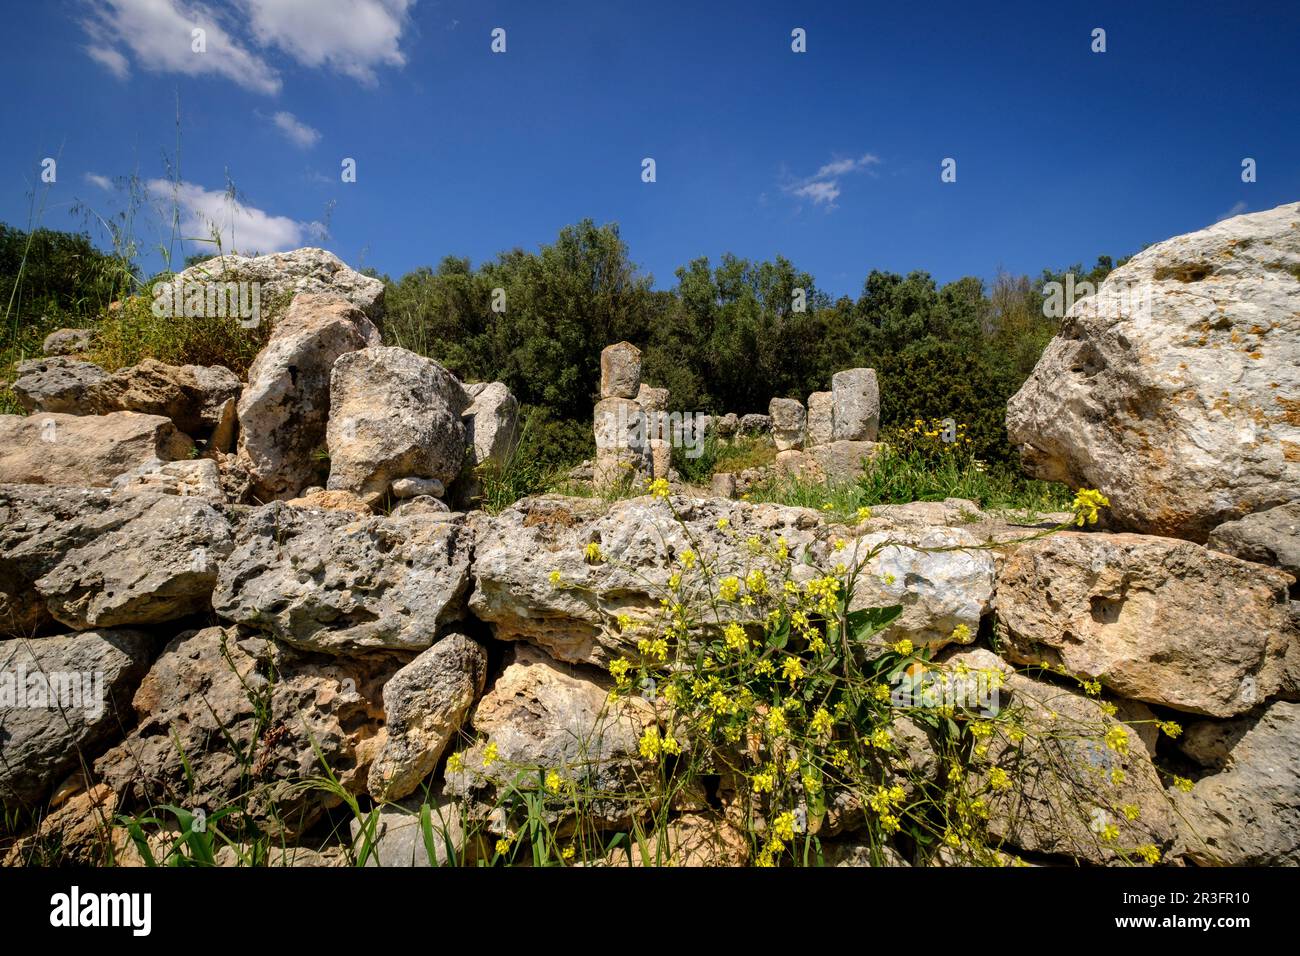 Son Corró , yacimiento arqueológico, datado en la época postalayótica (s.V-II A.c), SINEU, Isla de Mallorca, Iles Baléares, Espagne. Banque D'Images